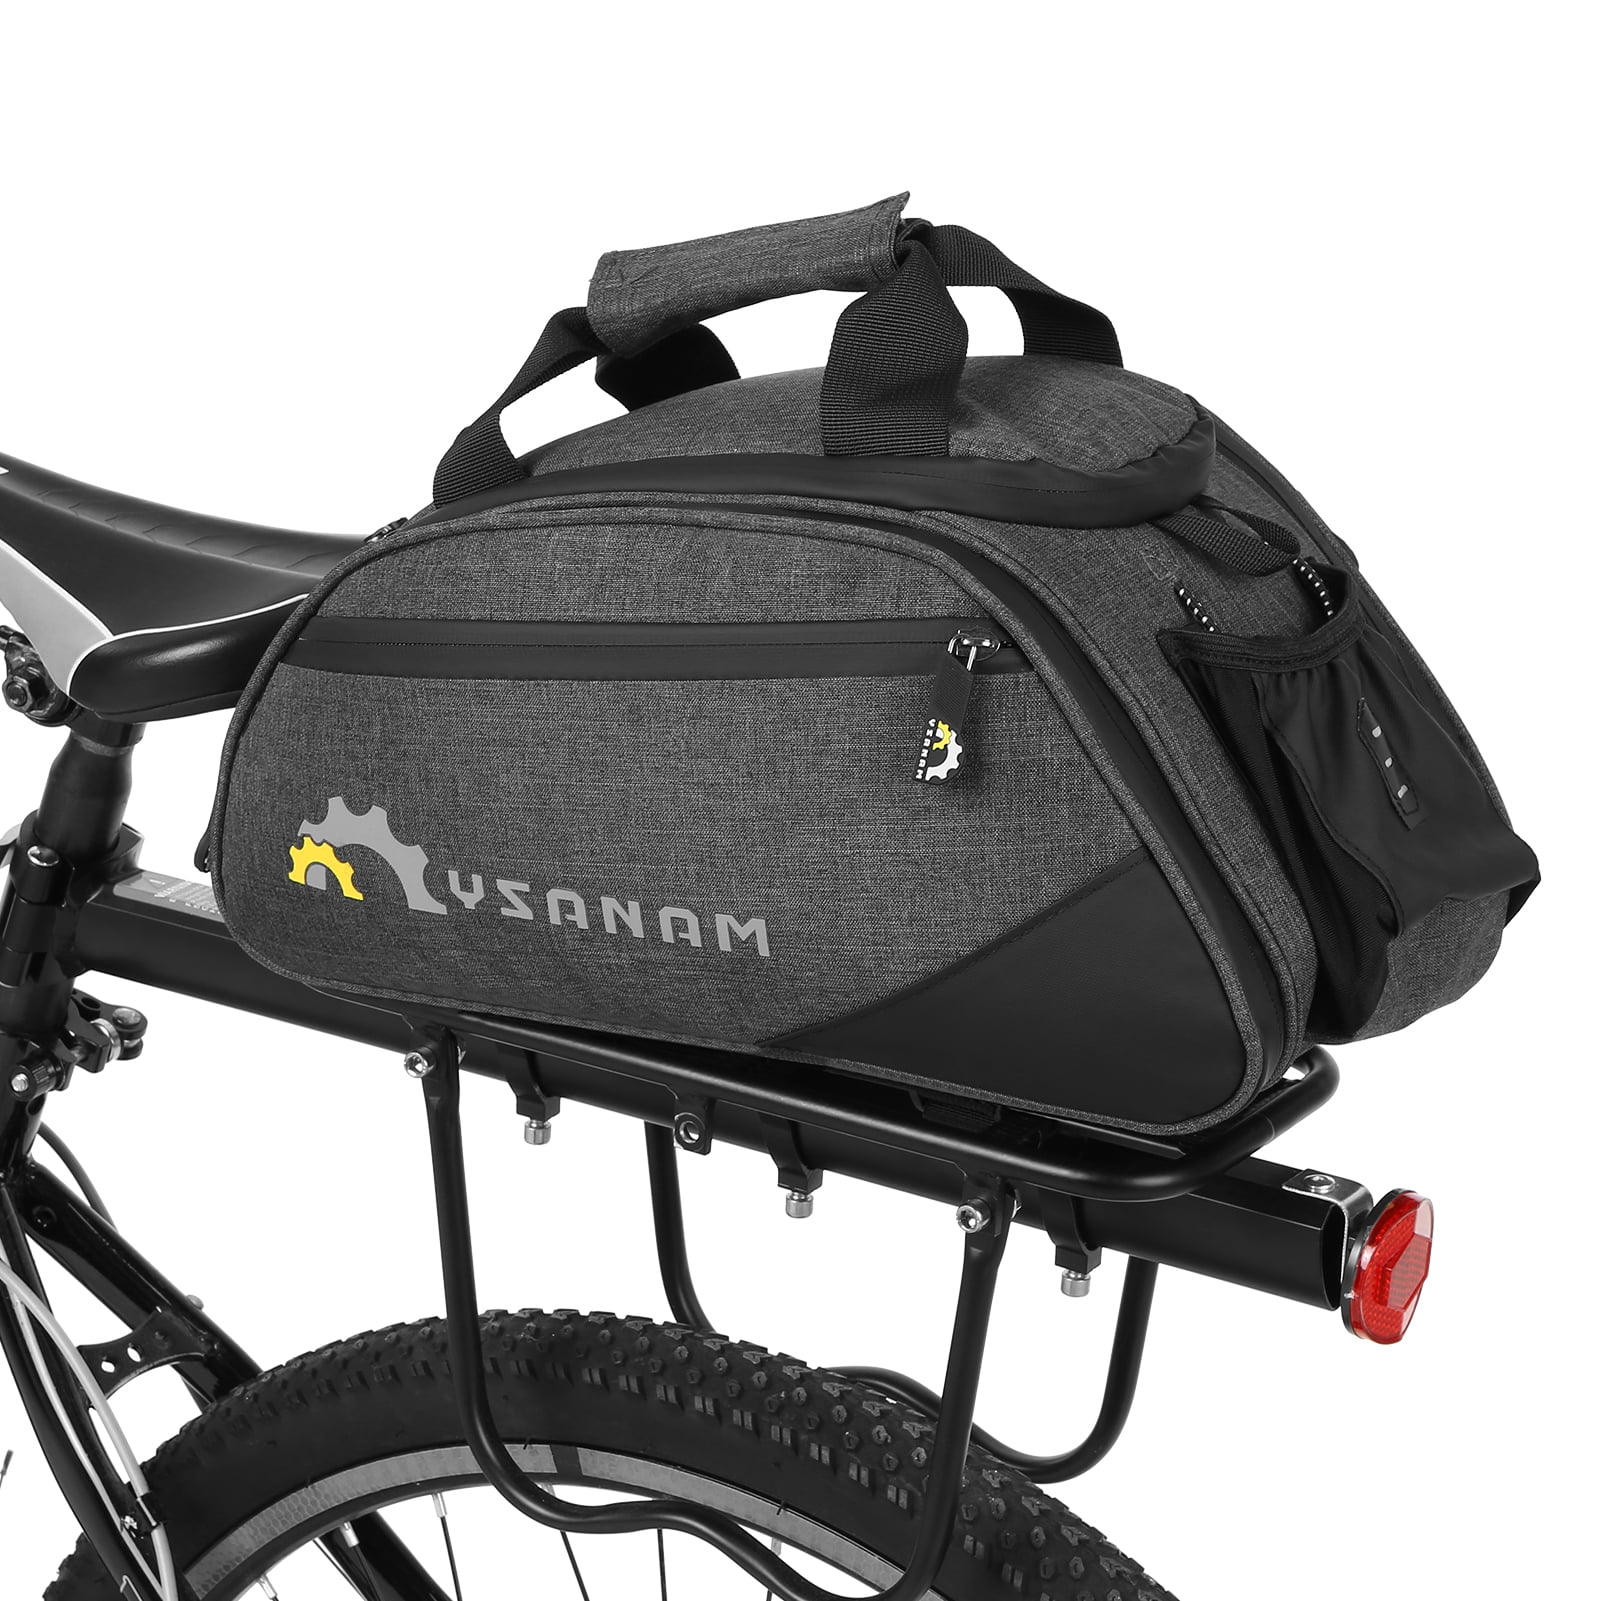 #N/A Bicycle Luggage Bag Bike Double Side Saddlebag Large Capacity Rear Rack Seat Pannier Storage Organizer,Gray